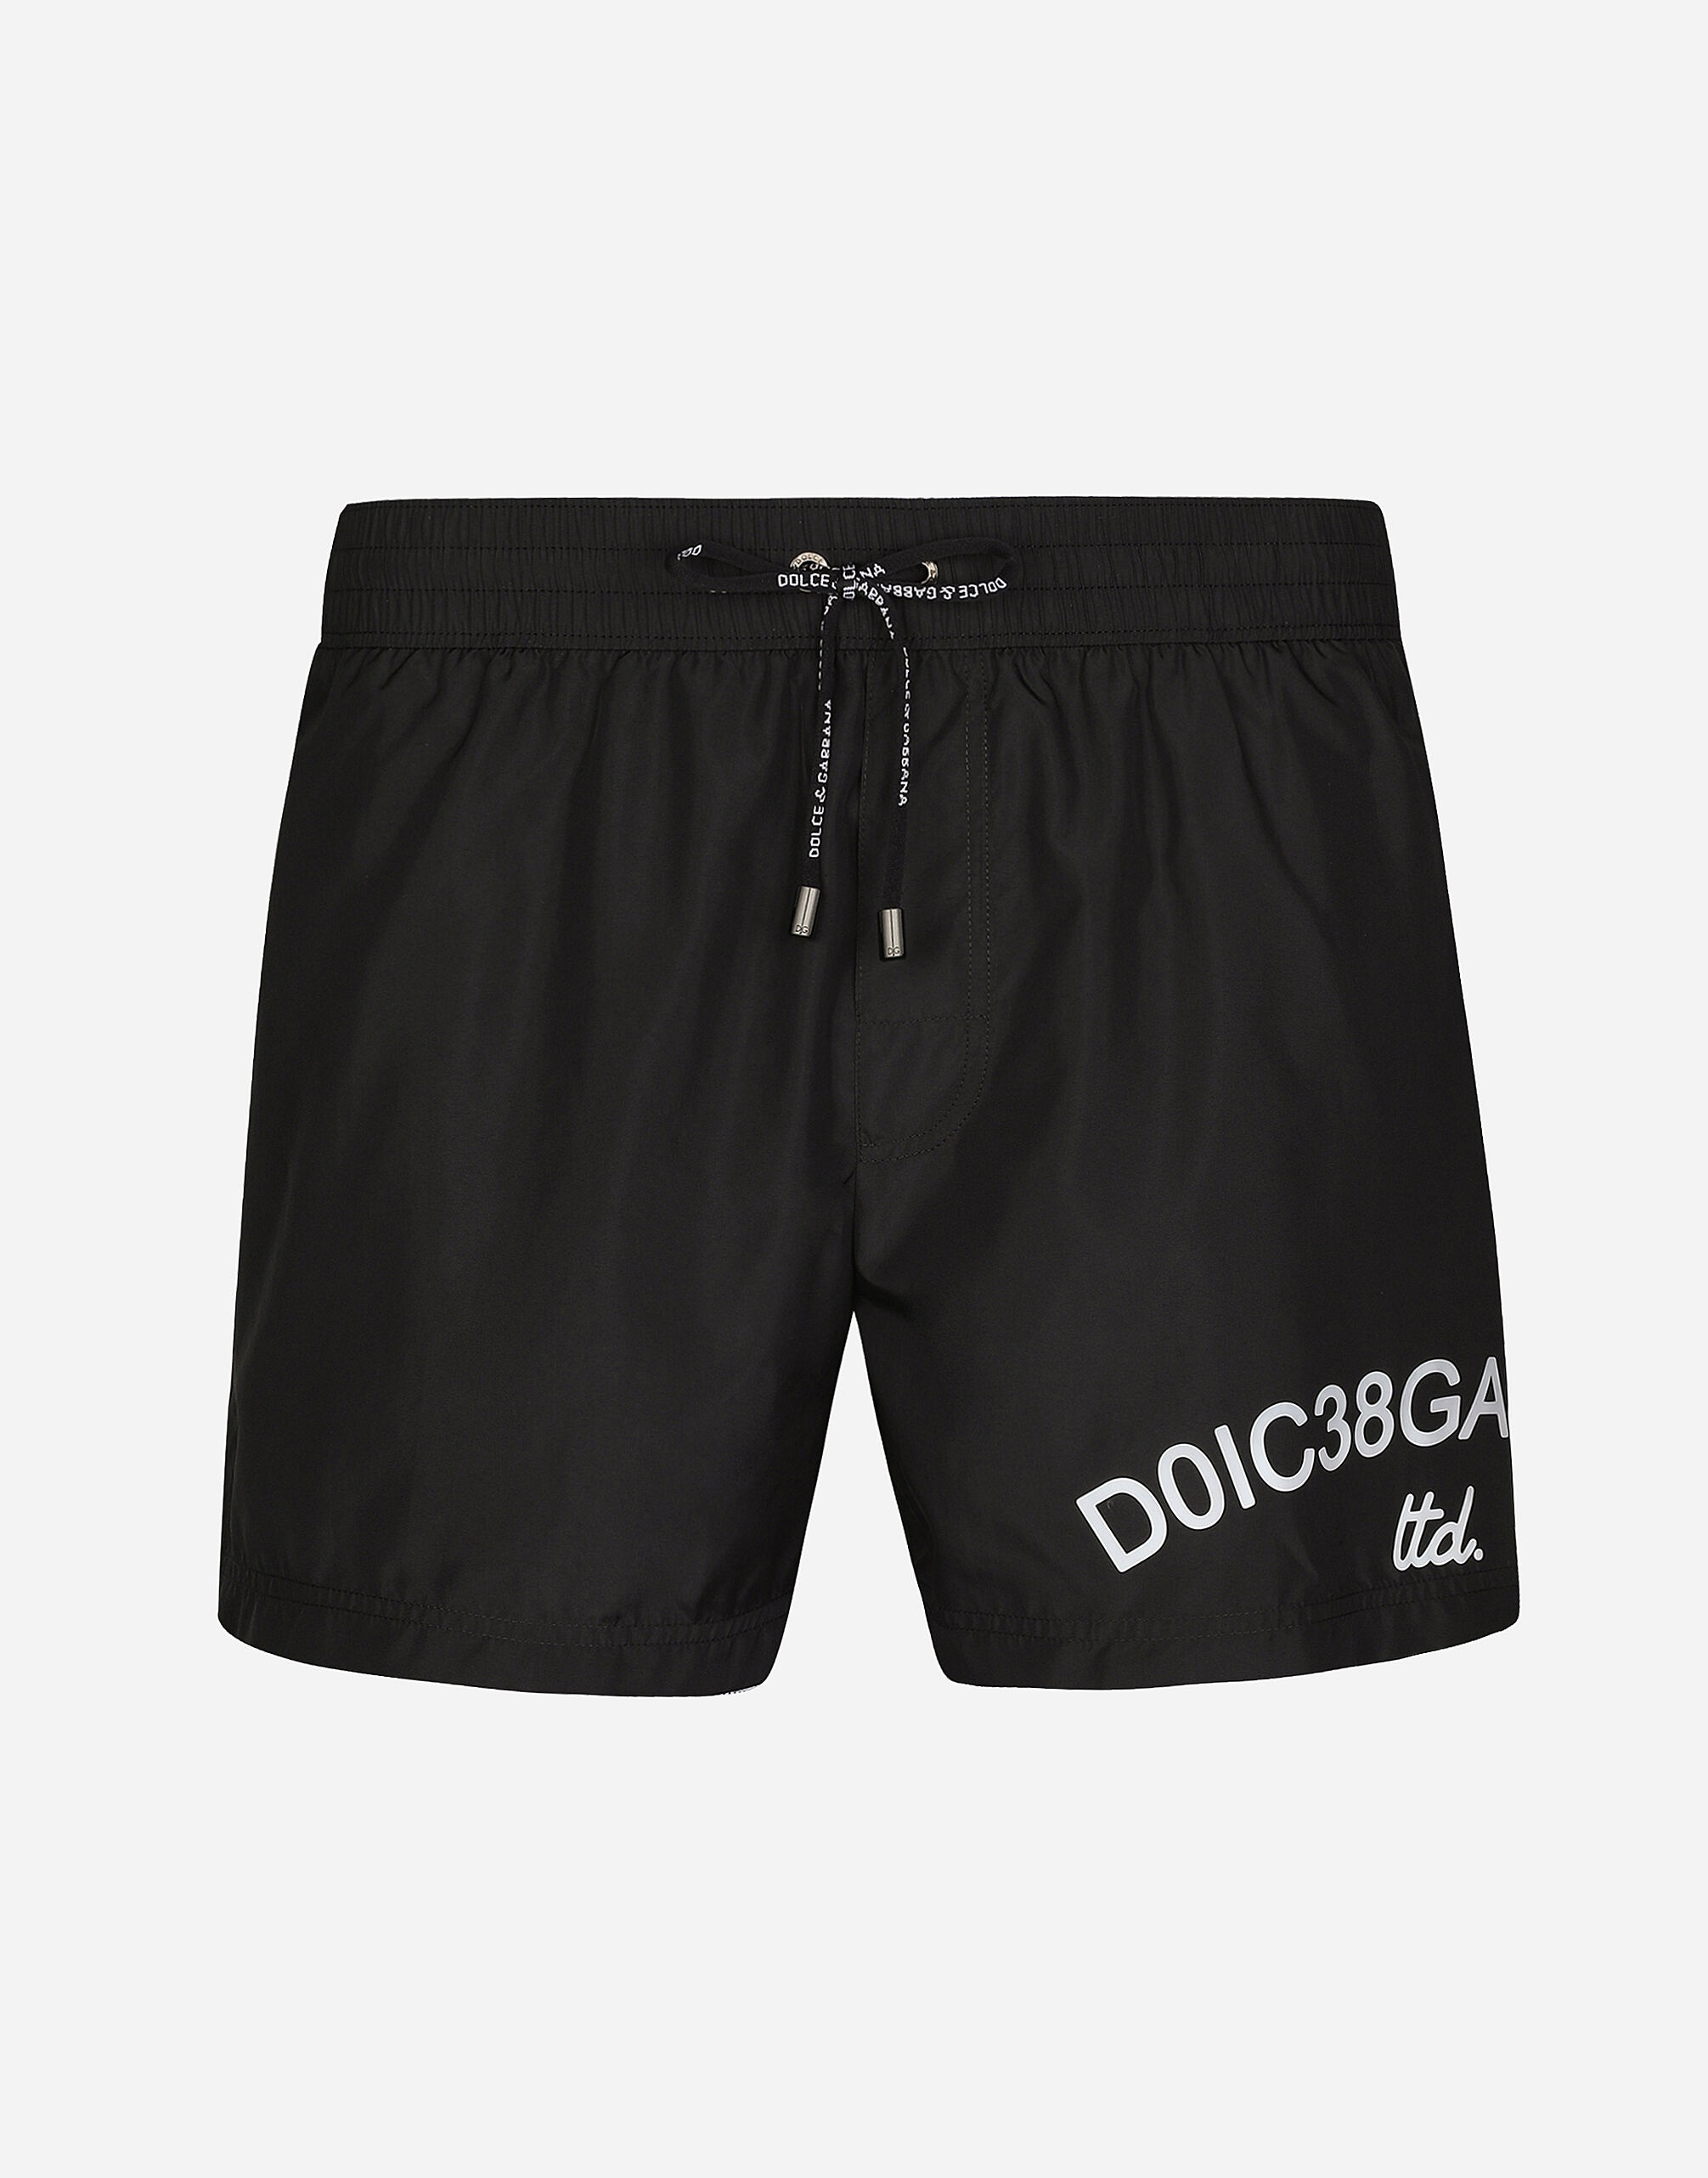 Short swim trunks with Dolce&Gabbana logo - 1